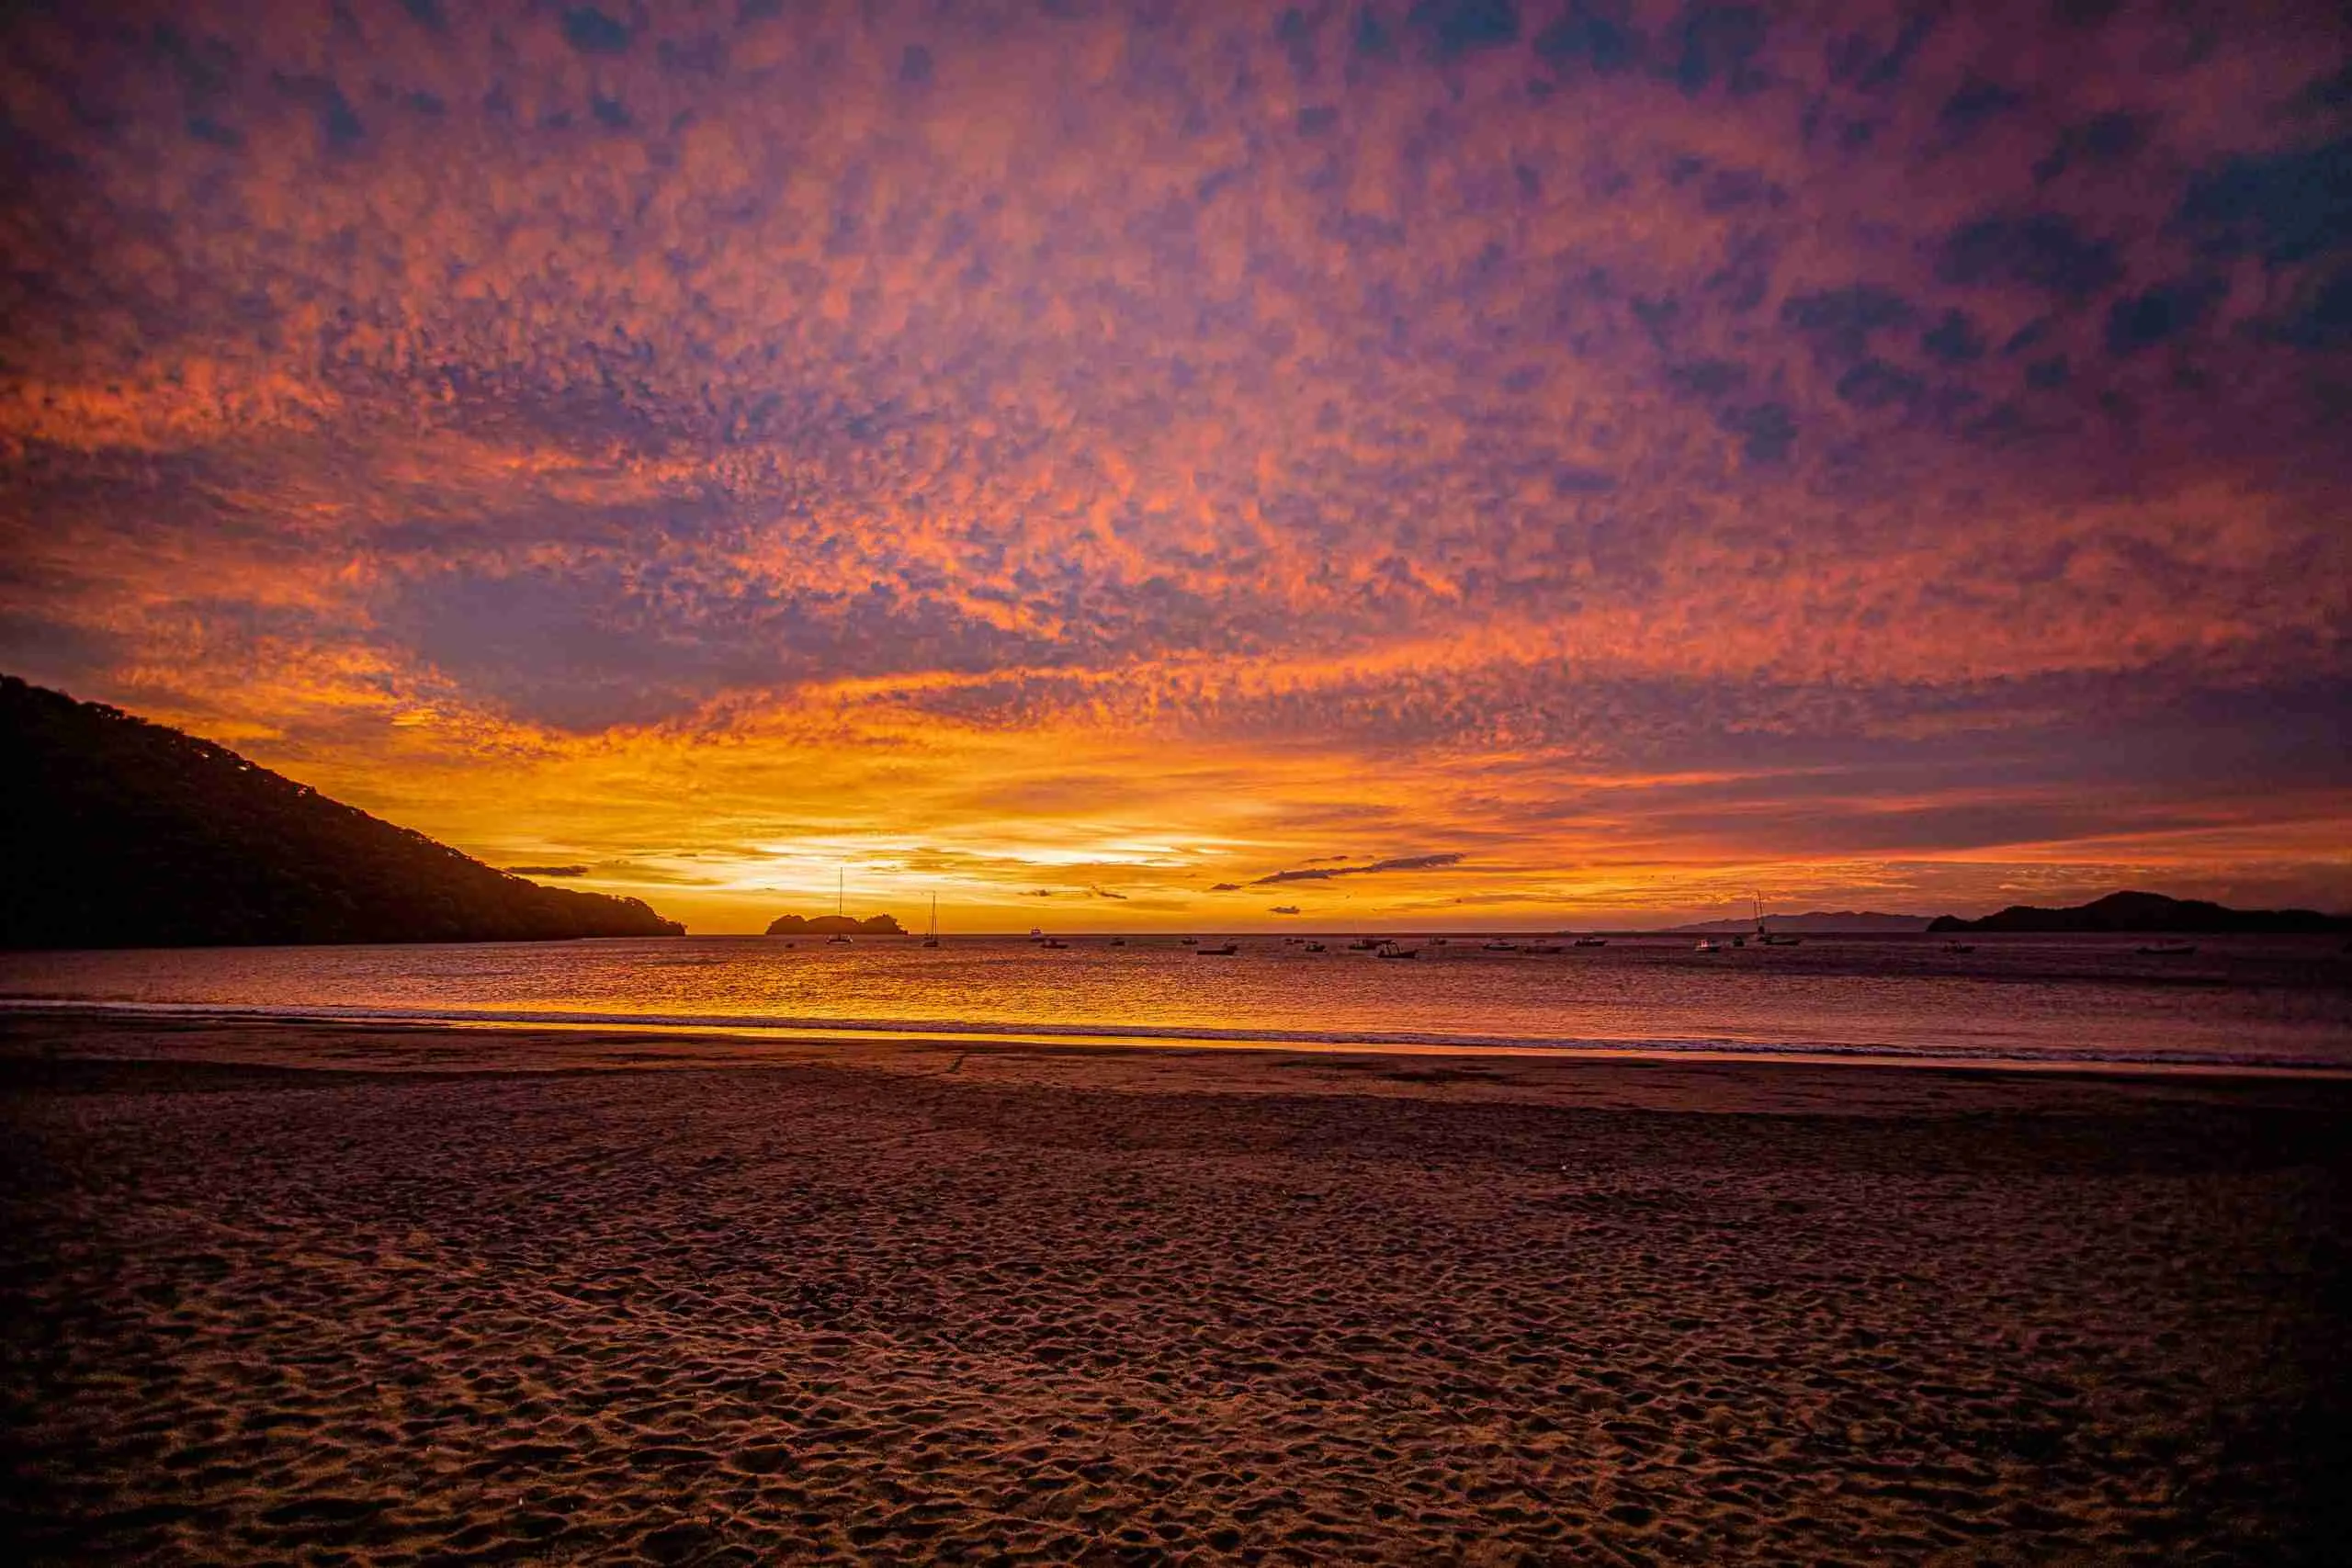 sunset at costa rica marriage retreat resort in Costa Rica